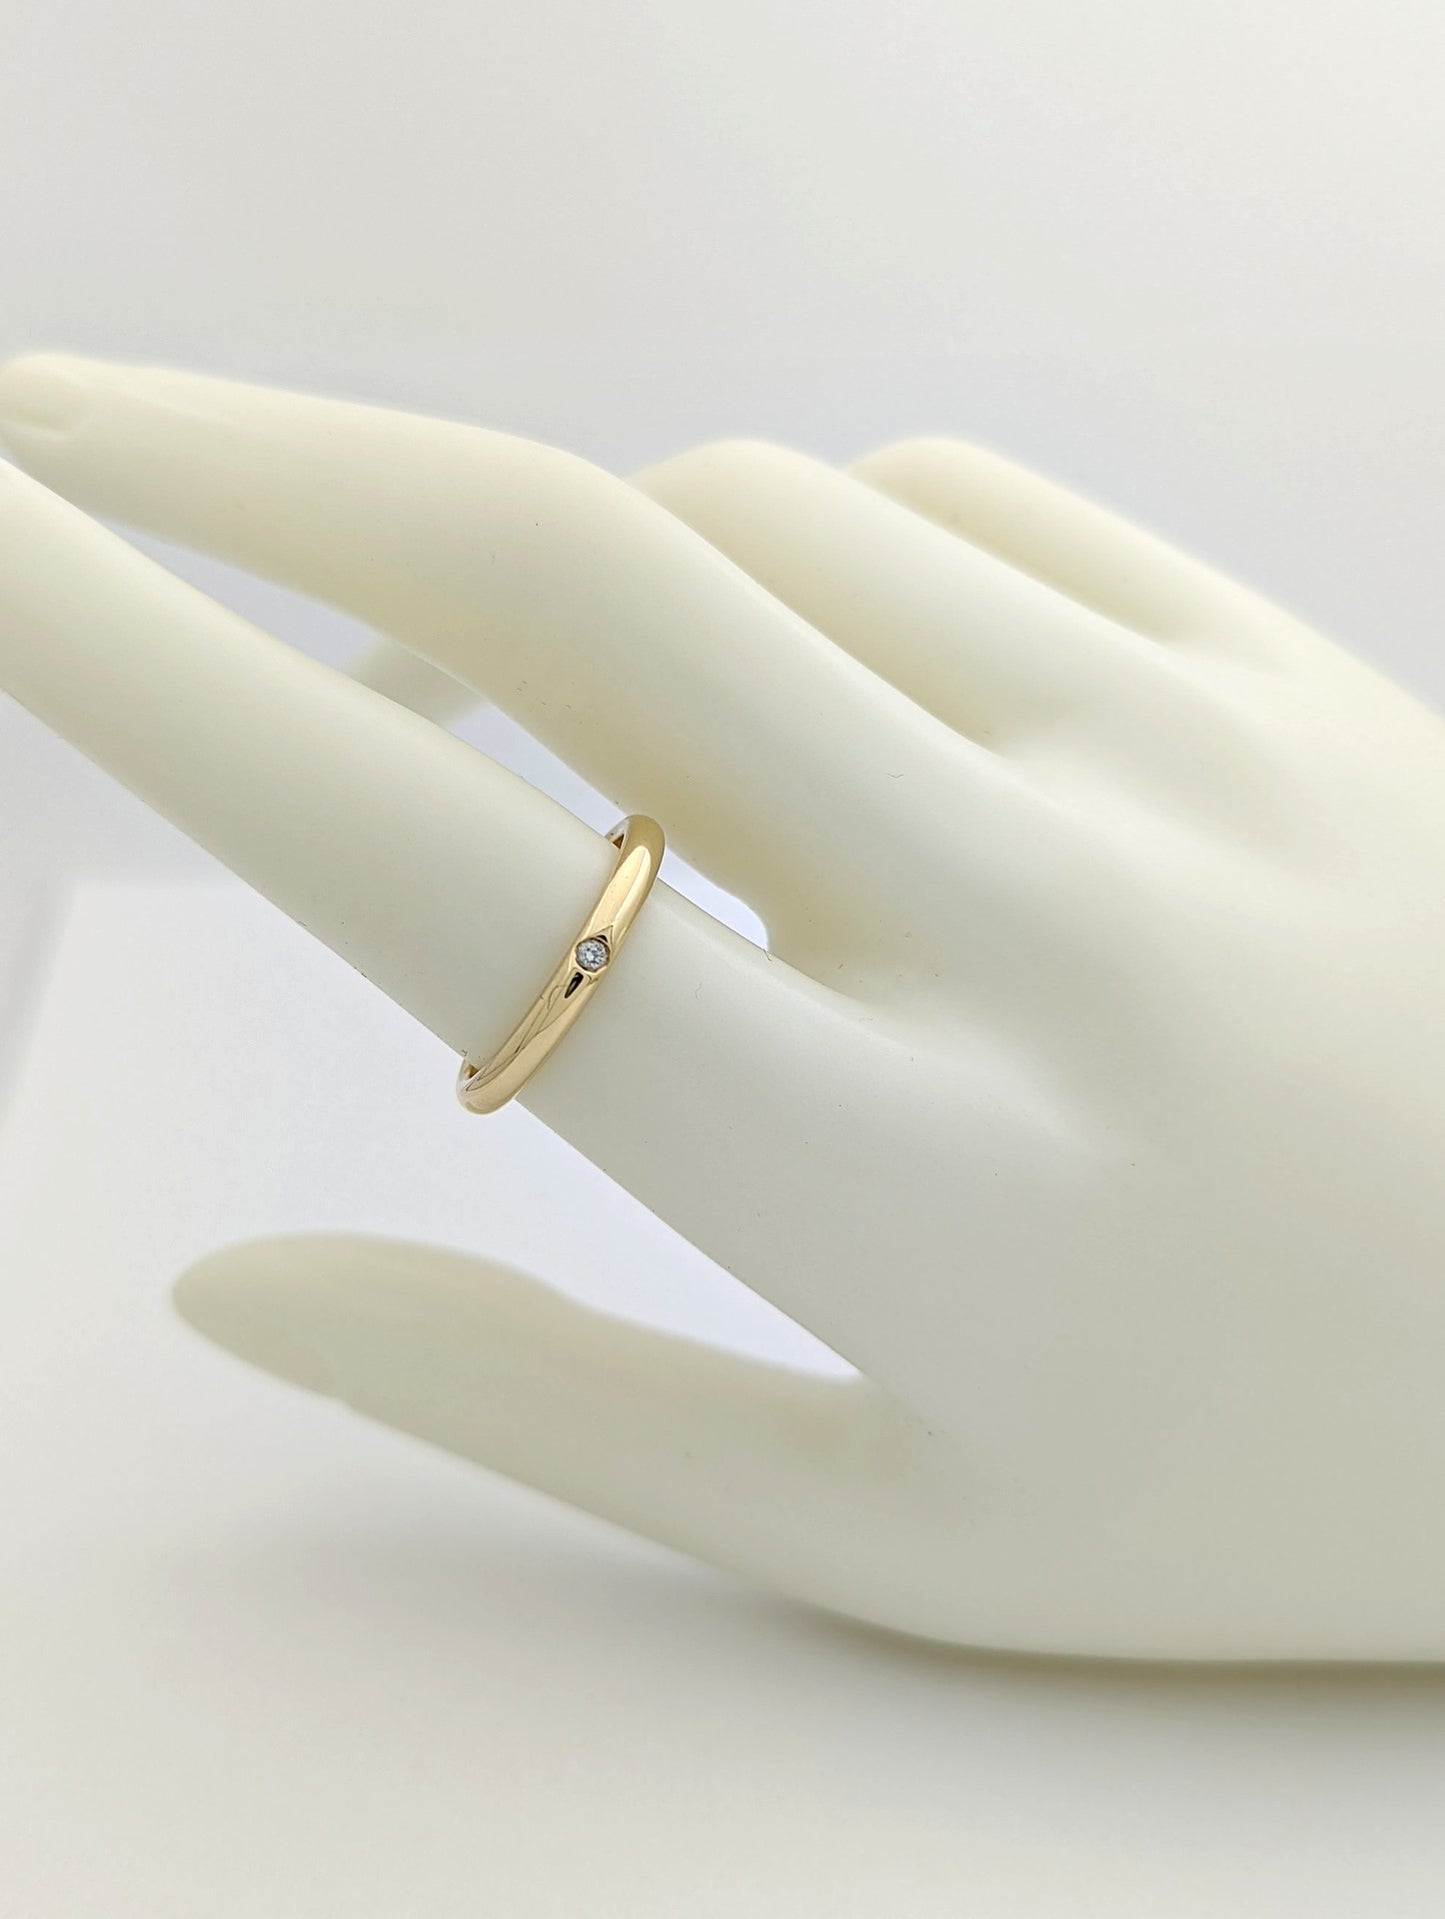 Tiffany & Co. Elsa Peretti Diamond Band Stacking Ring 18K Yellow Gold